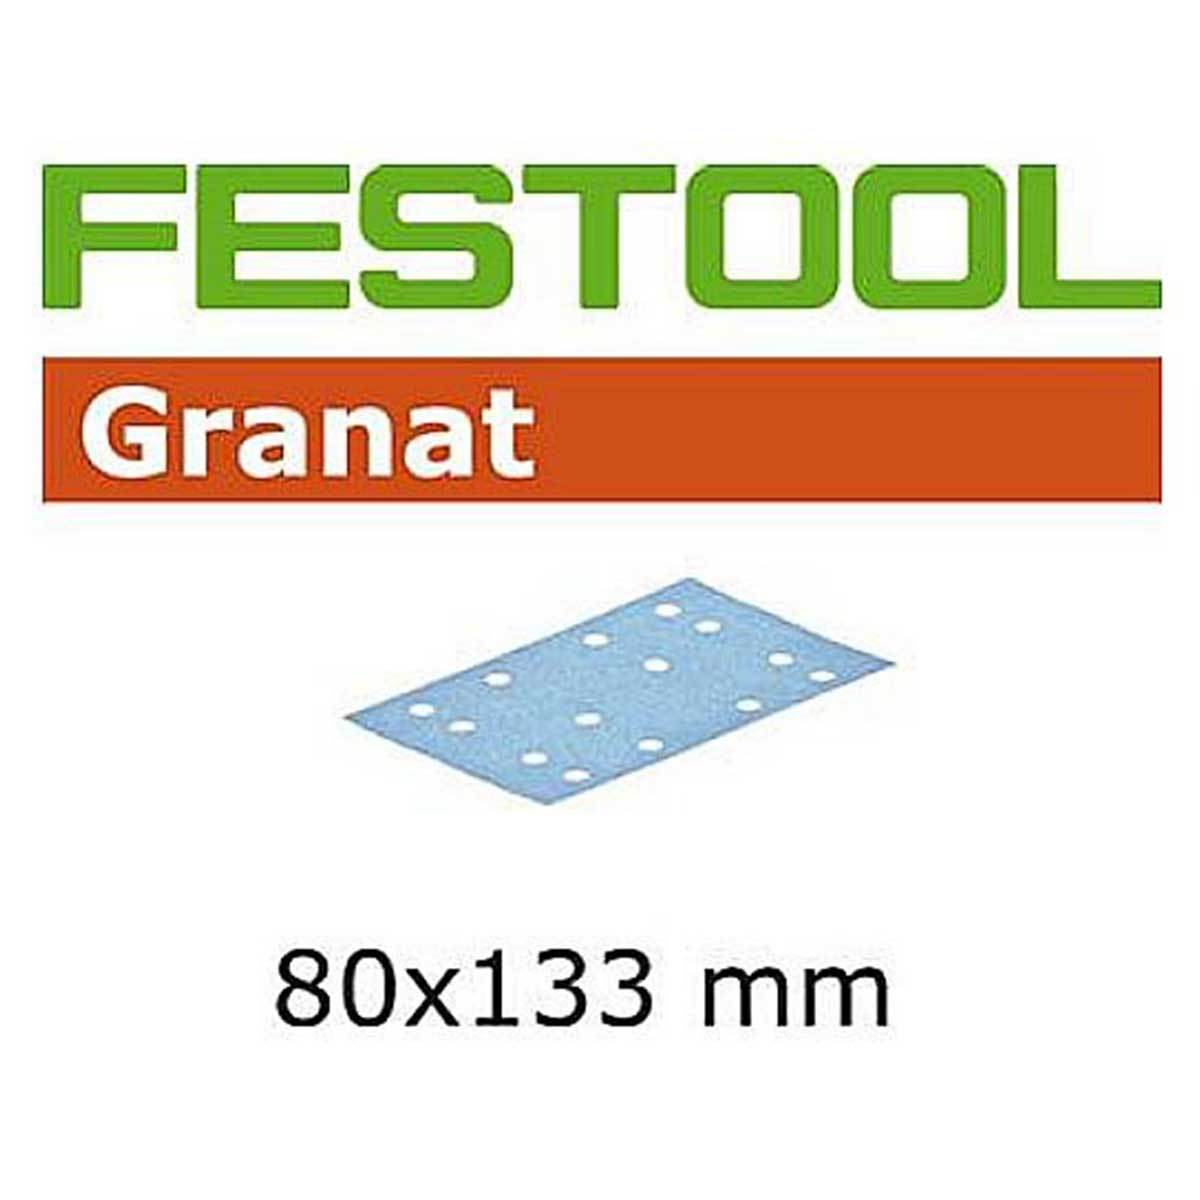 Festool 80x133 millimetre (3.2x5.2") Granat StickFix abrasive sheet for RTS 400, RTSC 400, and LS 130 sanders, and HSK block.